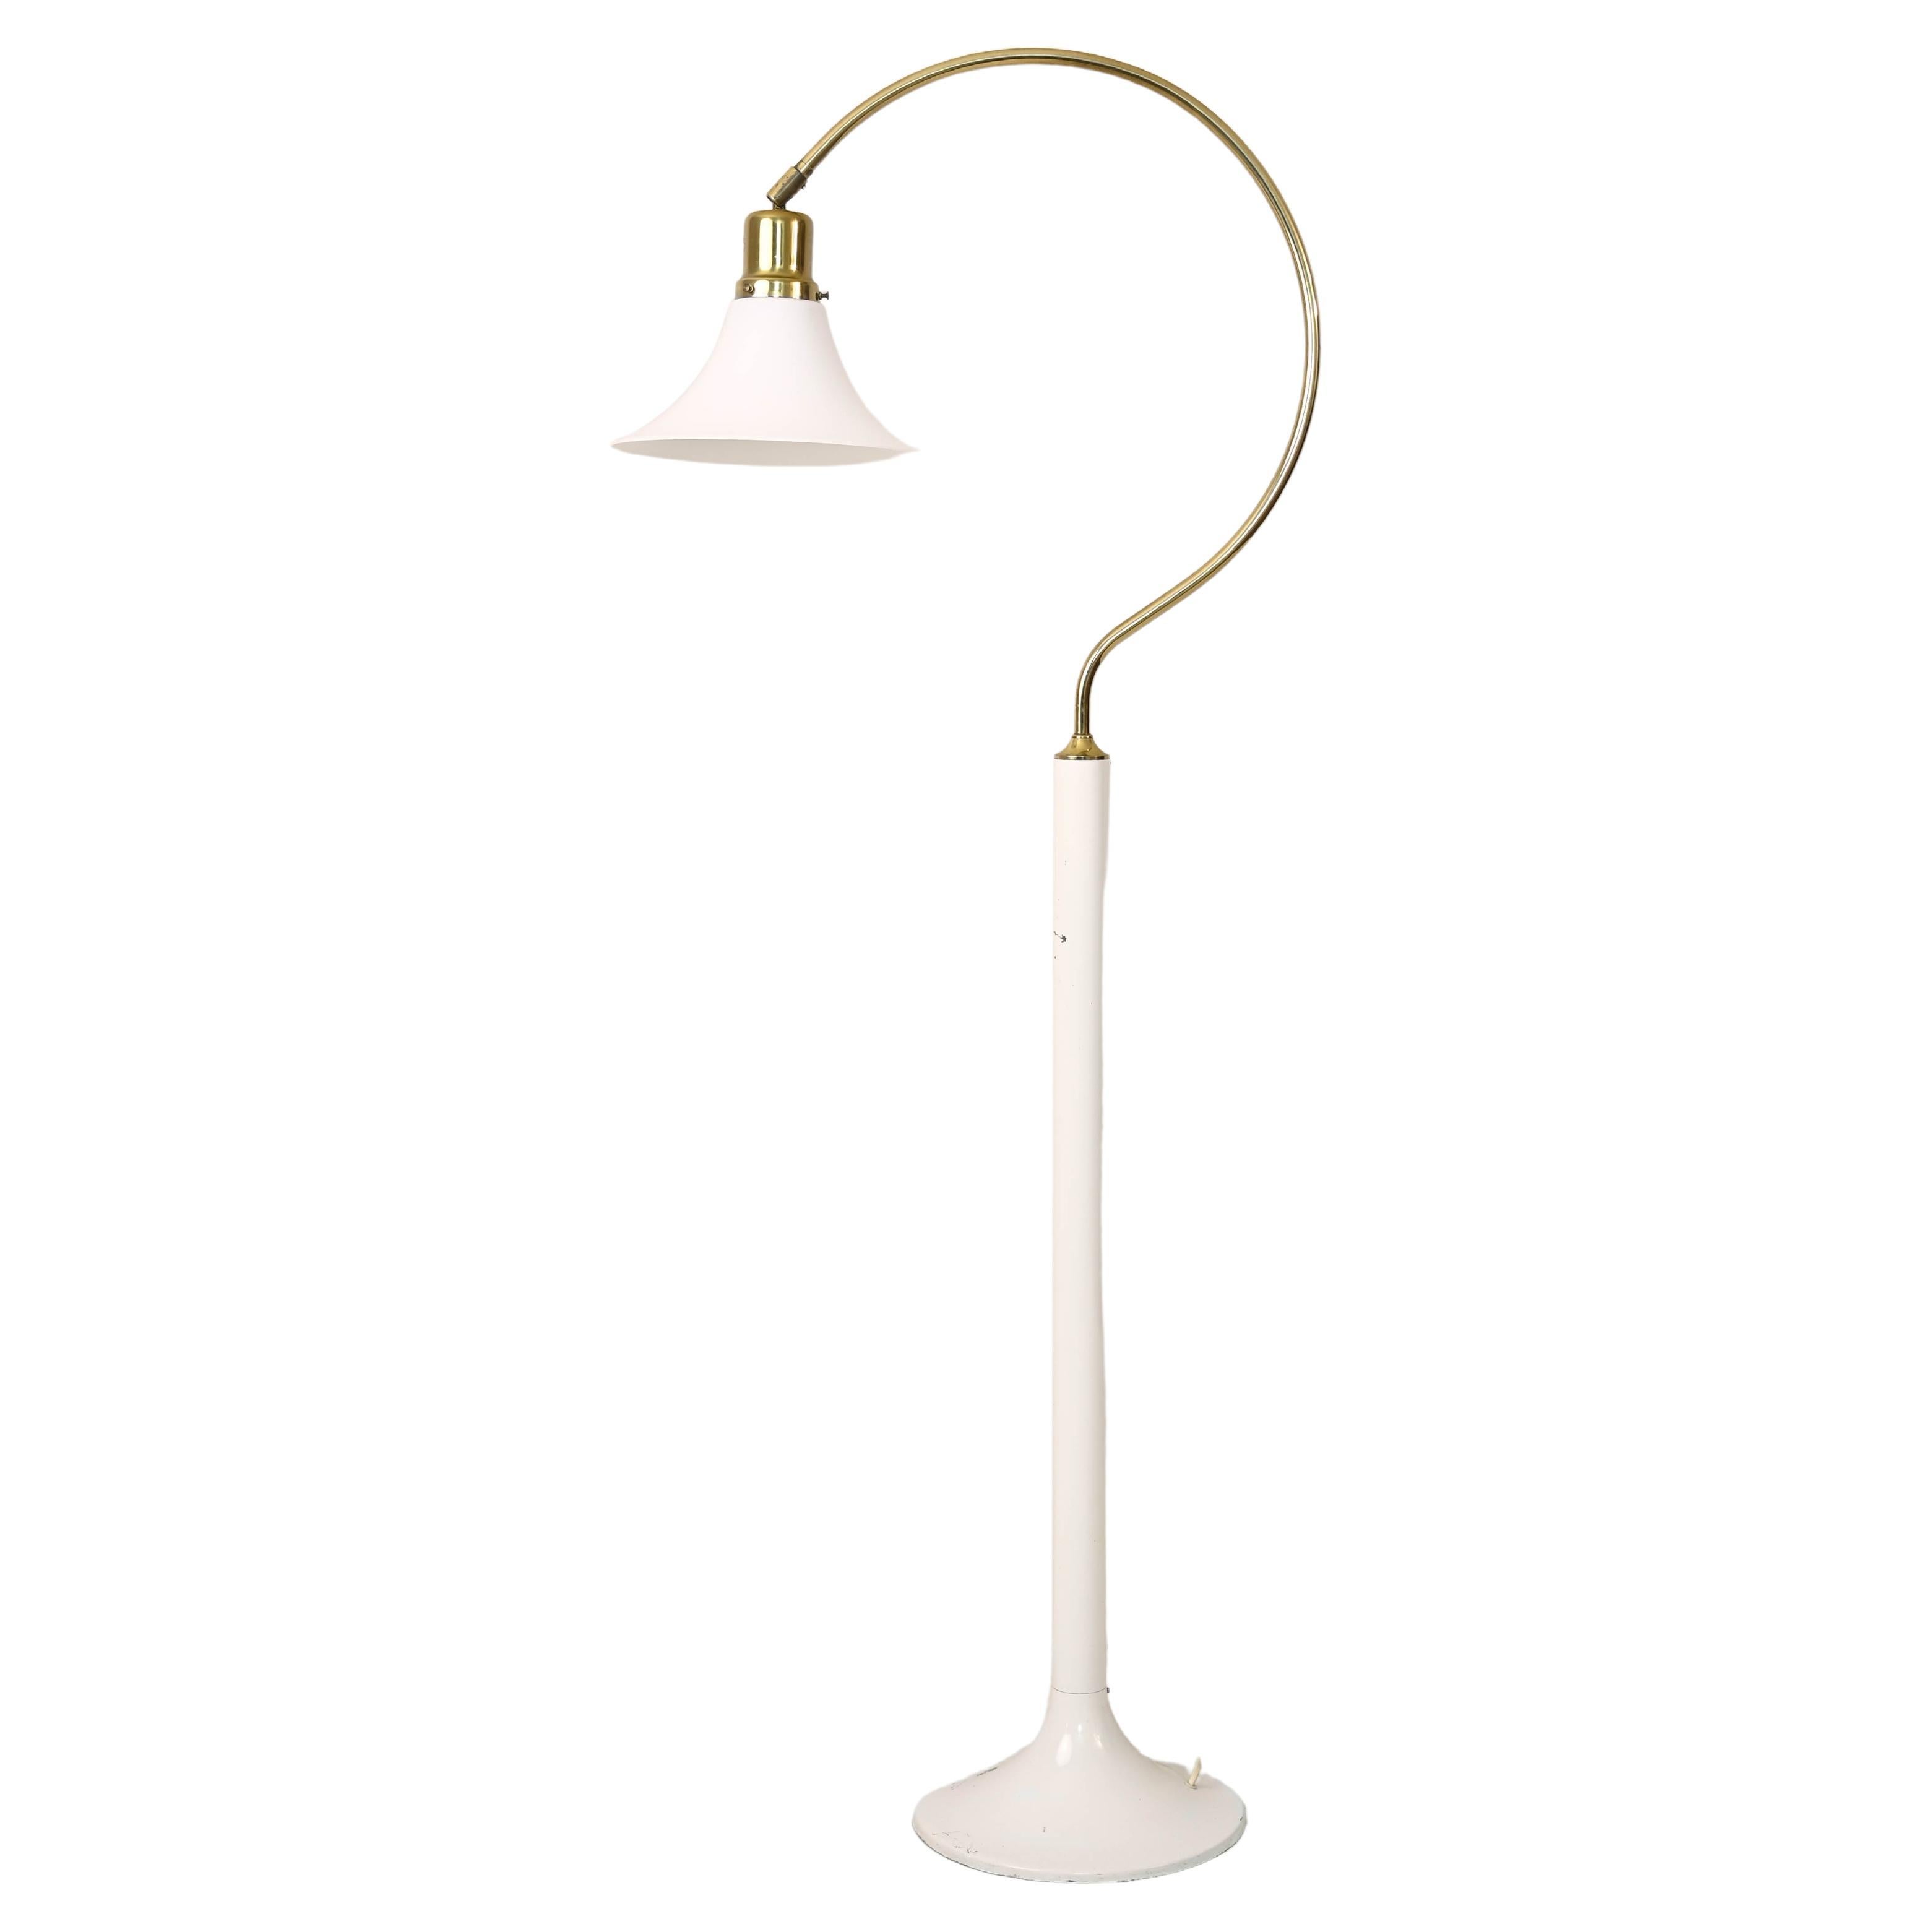 Vintage C-Shaped Lamp For Sale